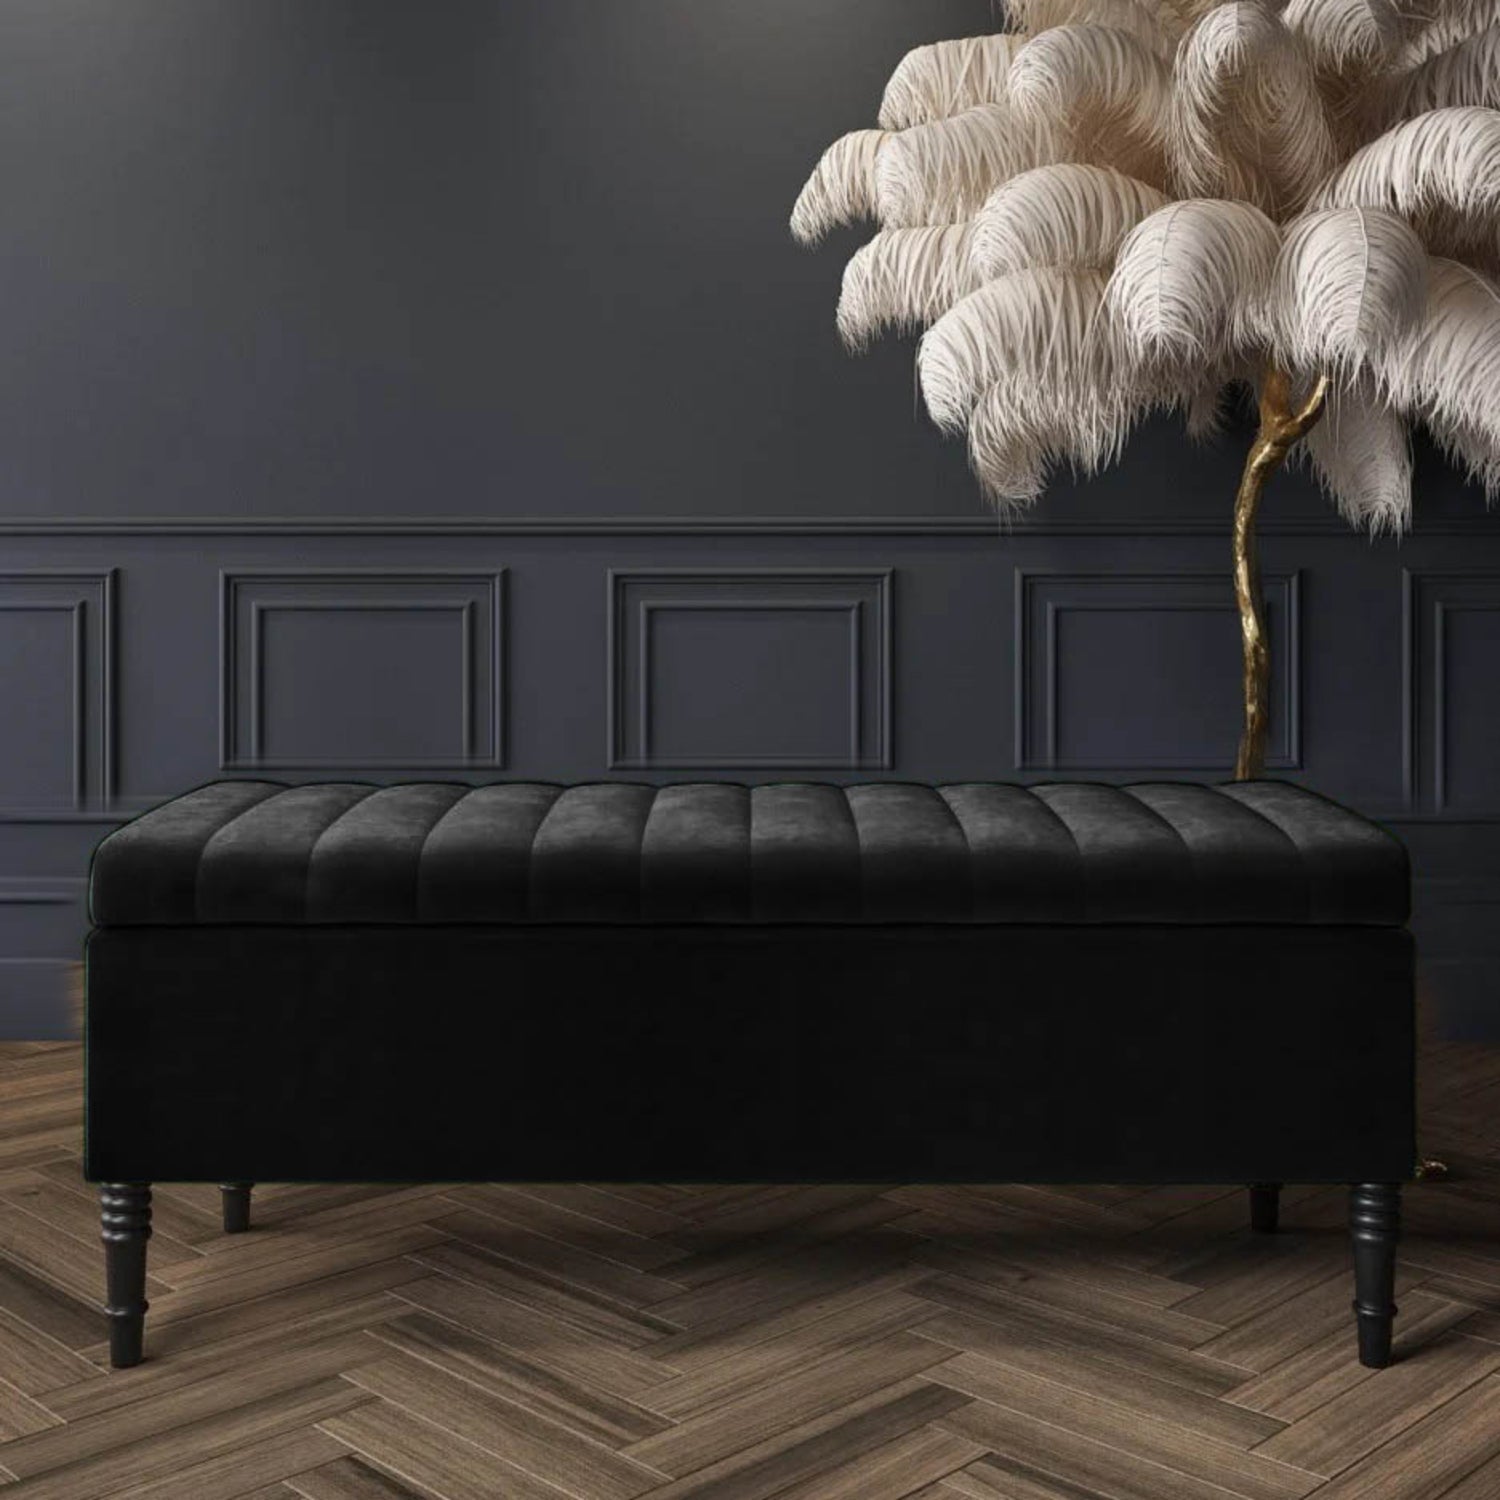 Luxurious Black Velvet Bench with Storage